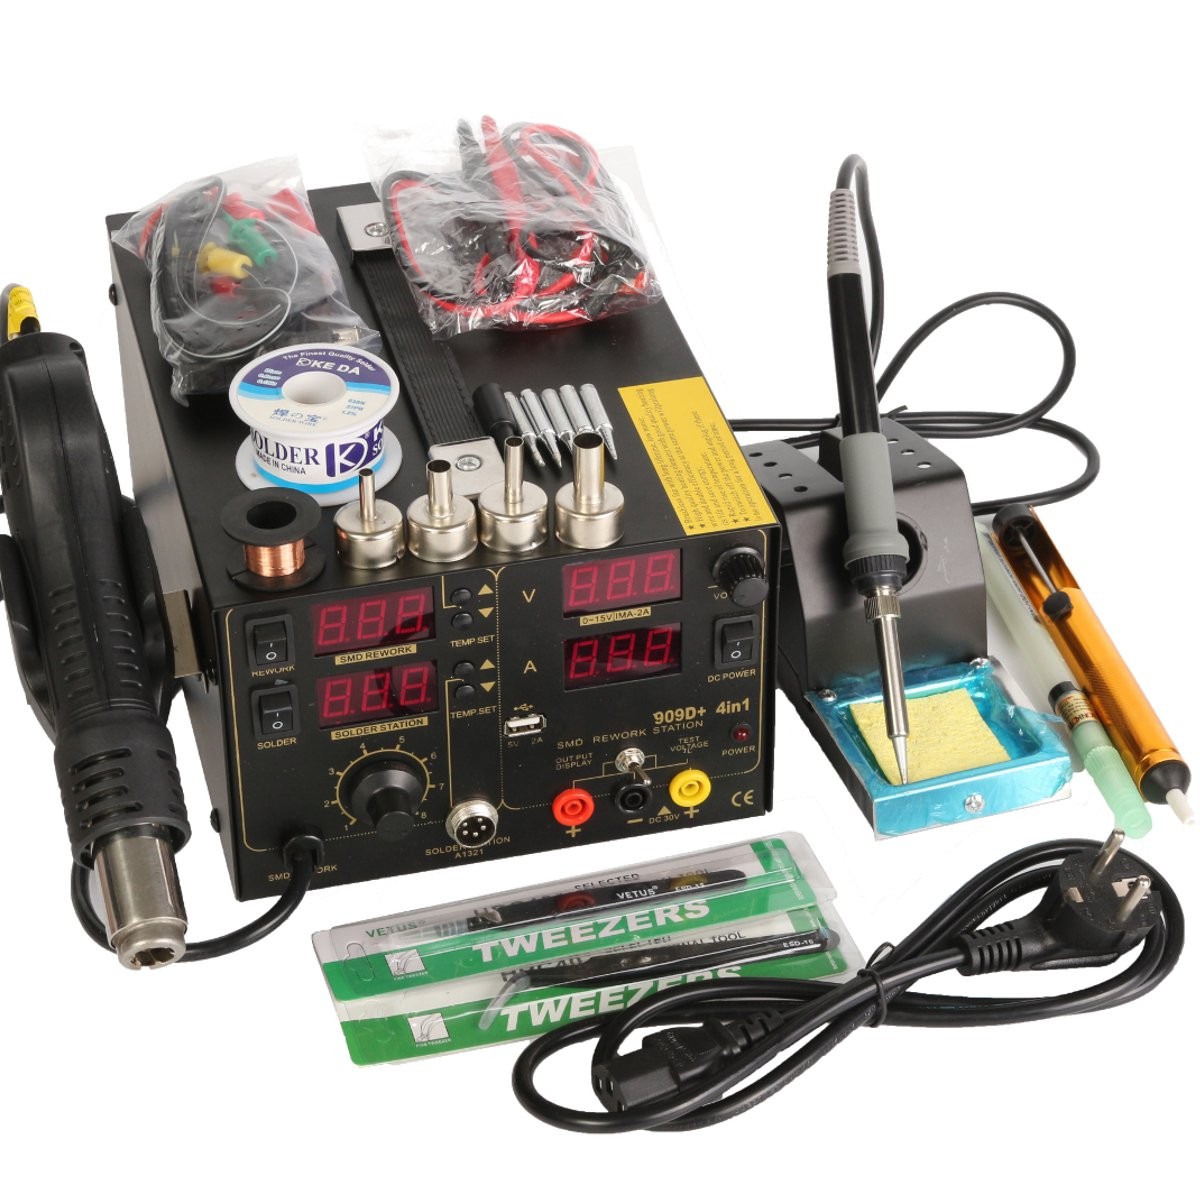 Saike-110V-AC-909D-Rework-Soldering-Station-Hot-Heat-Air-Nozzle-DC-USB-Power-Supply-US-Plug-1090753-2